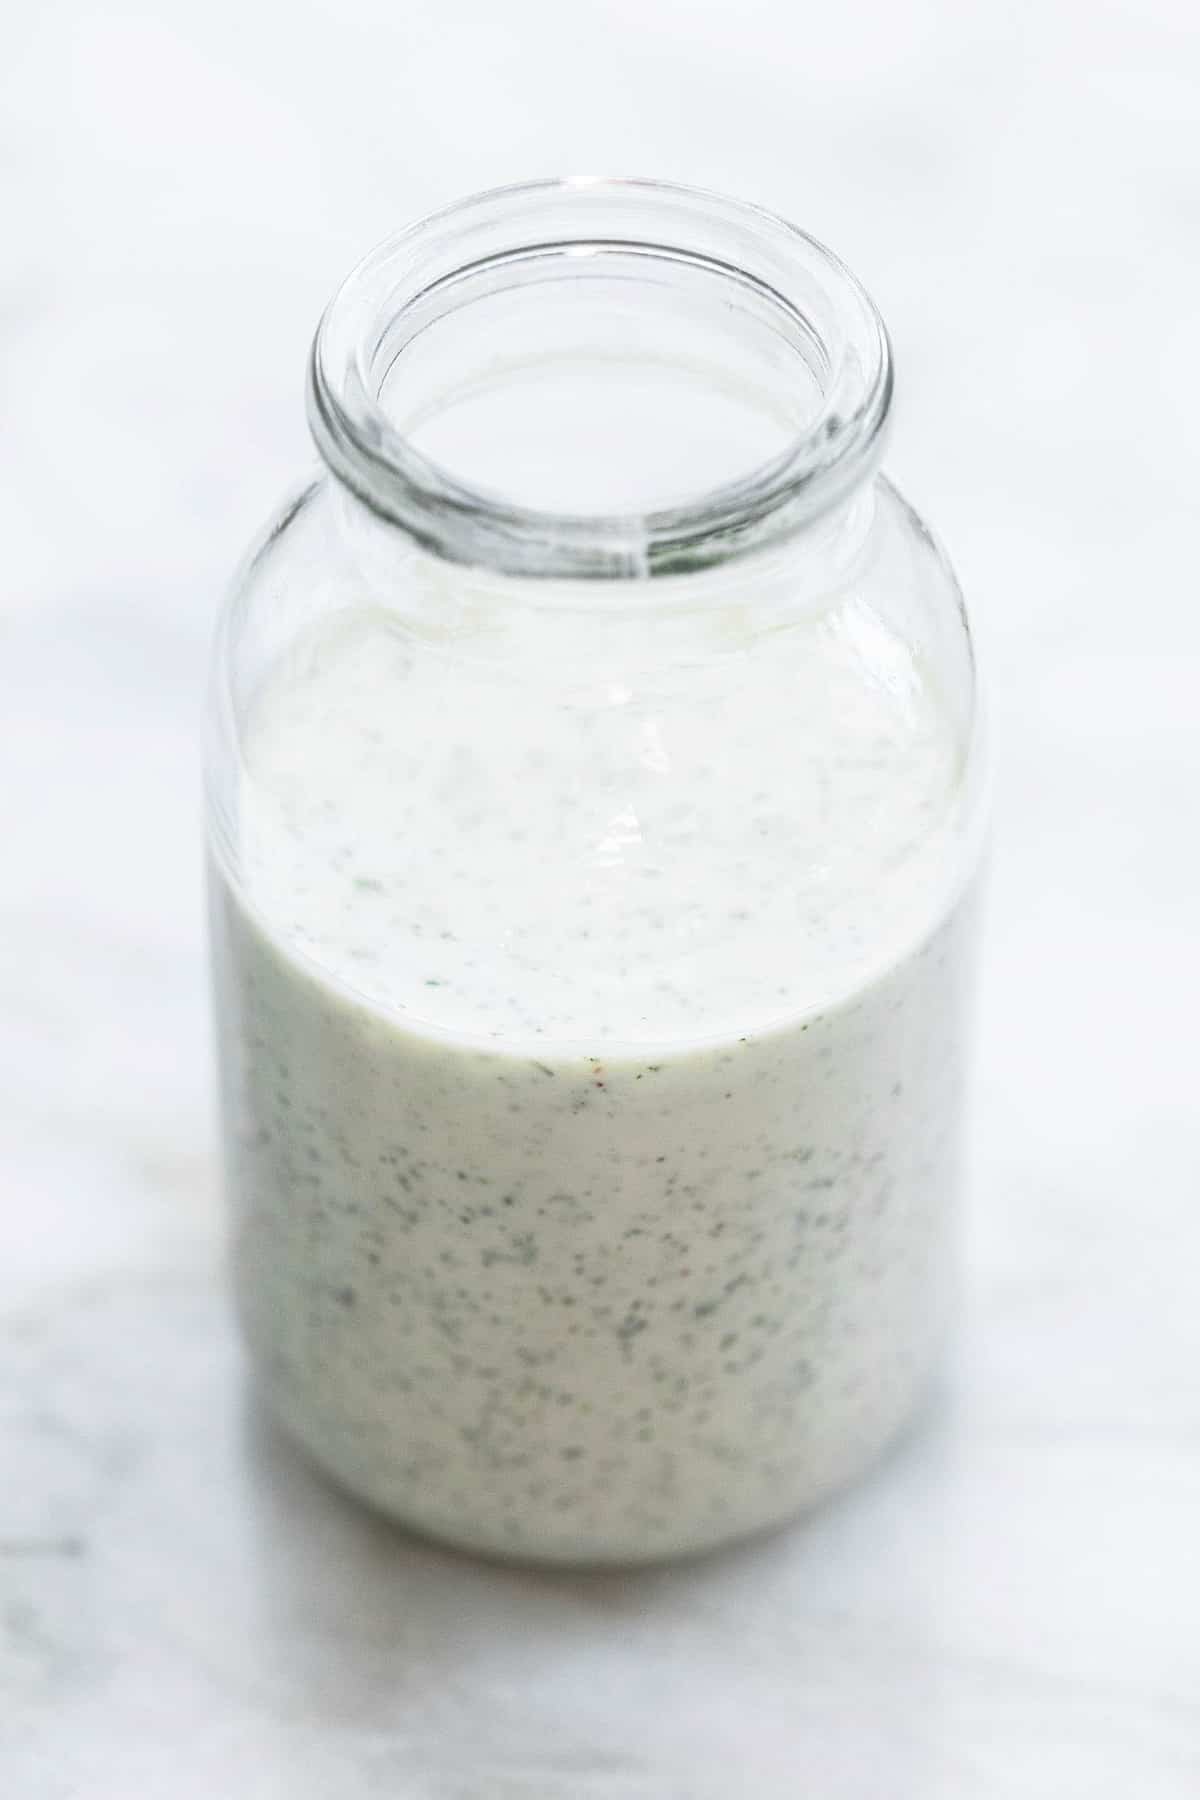 Greek yogurt ranch dressing or dip in a jar.